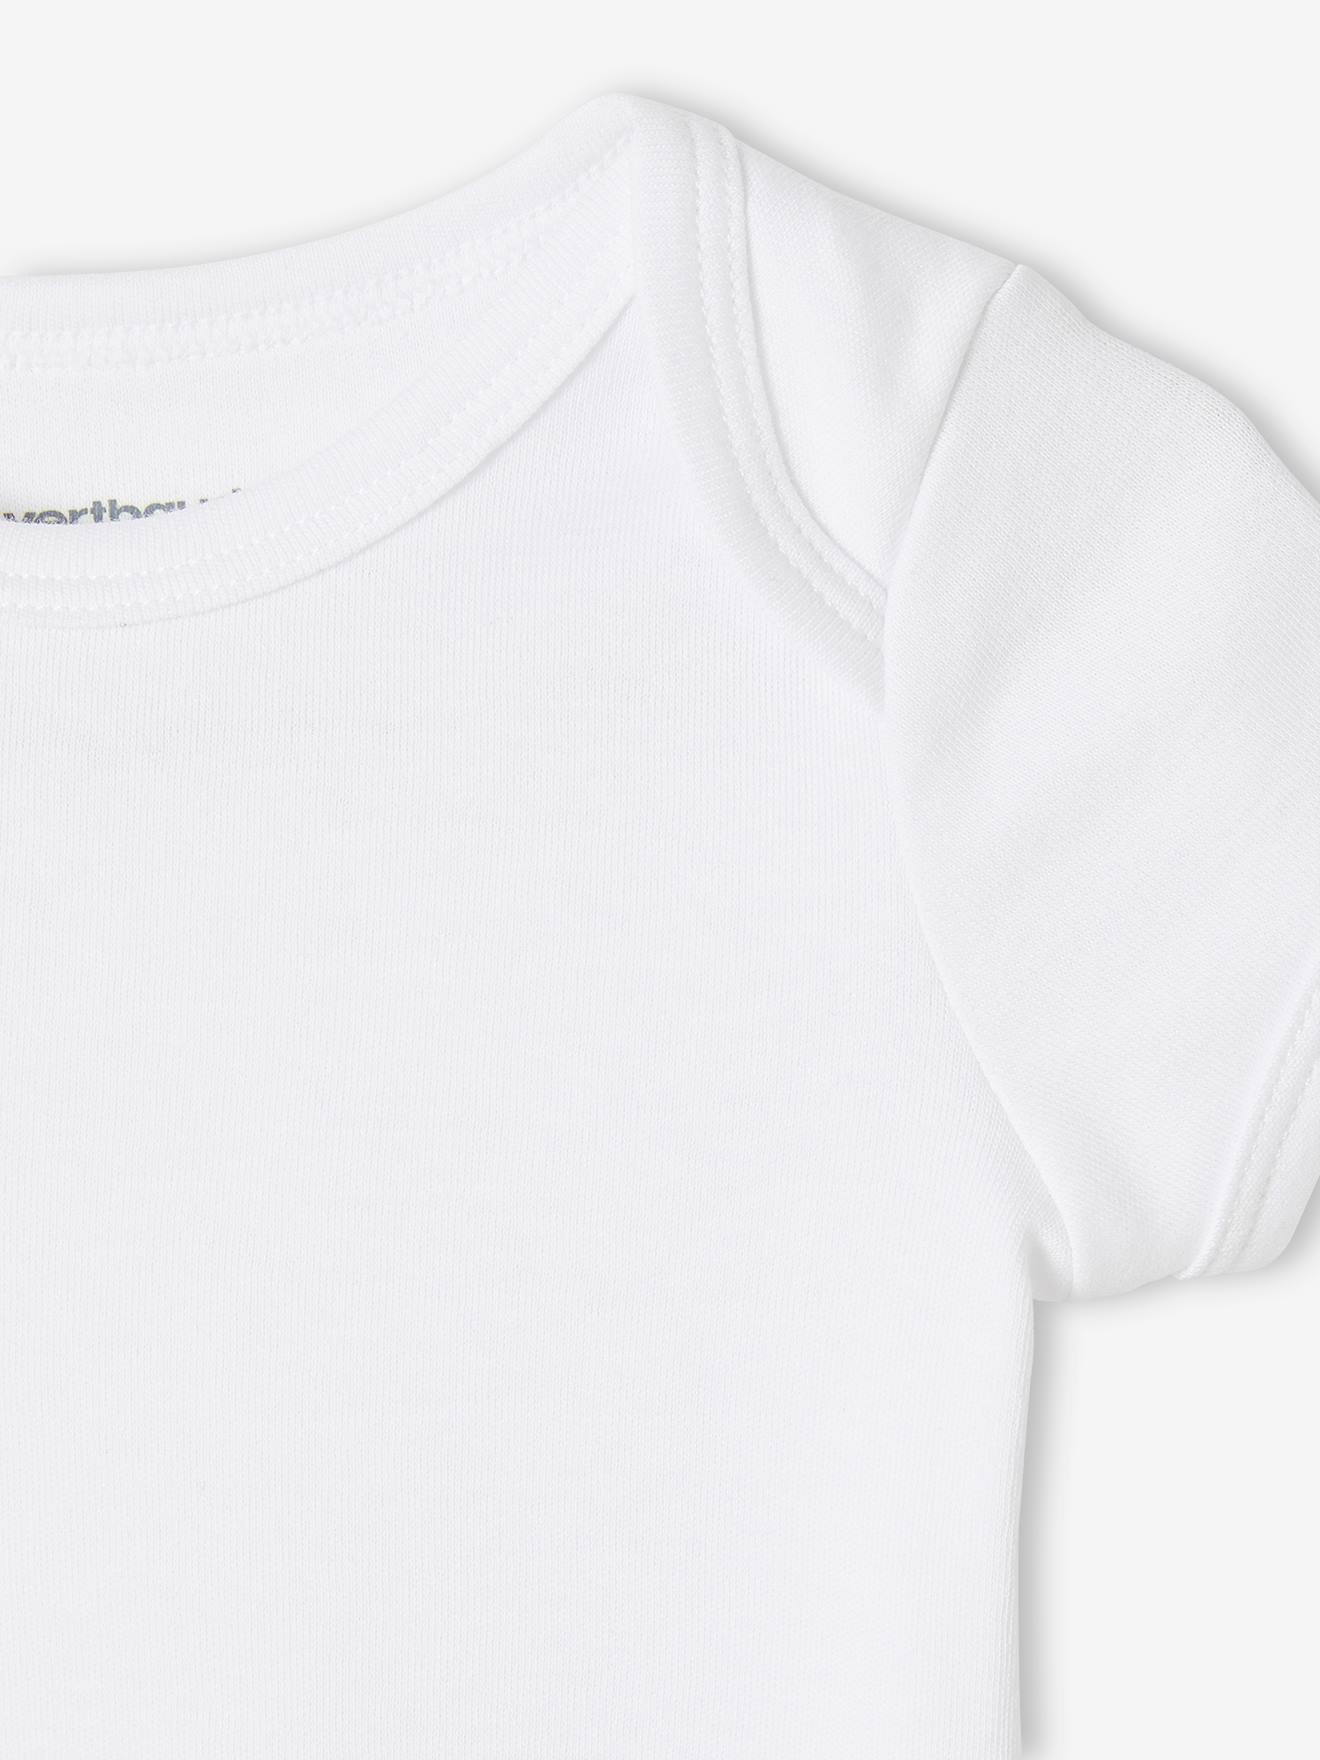 Pack of 7 Short Sleeve Bodysuits, Full-Length Opening, for Babies